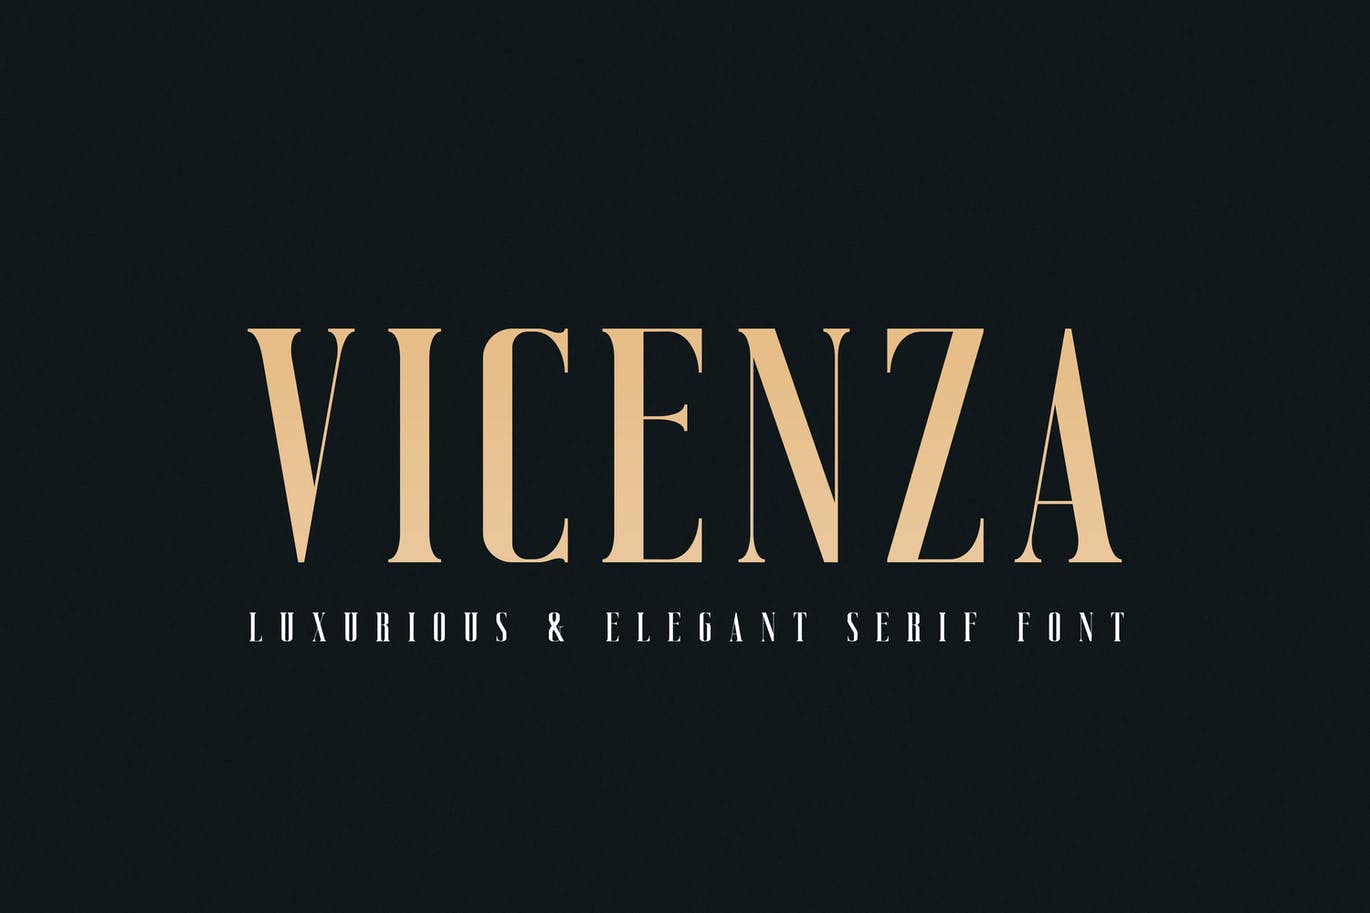 A luxurious elegant serif font